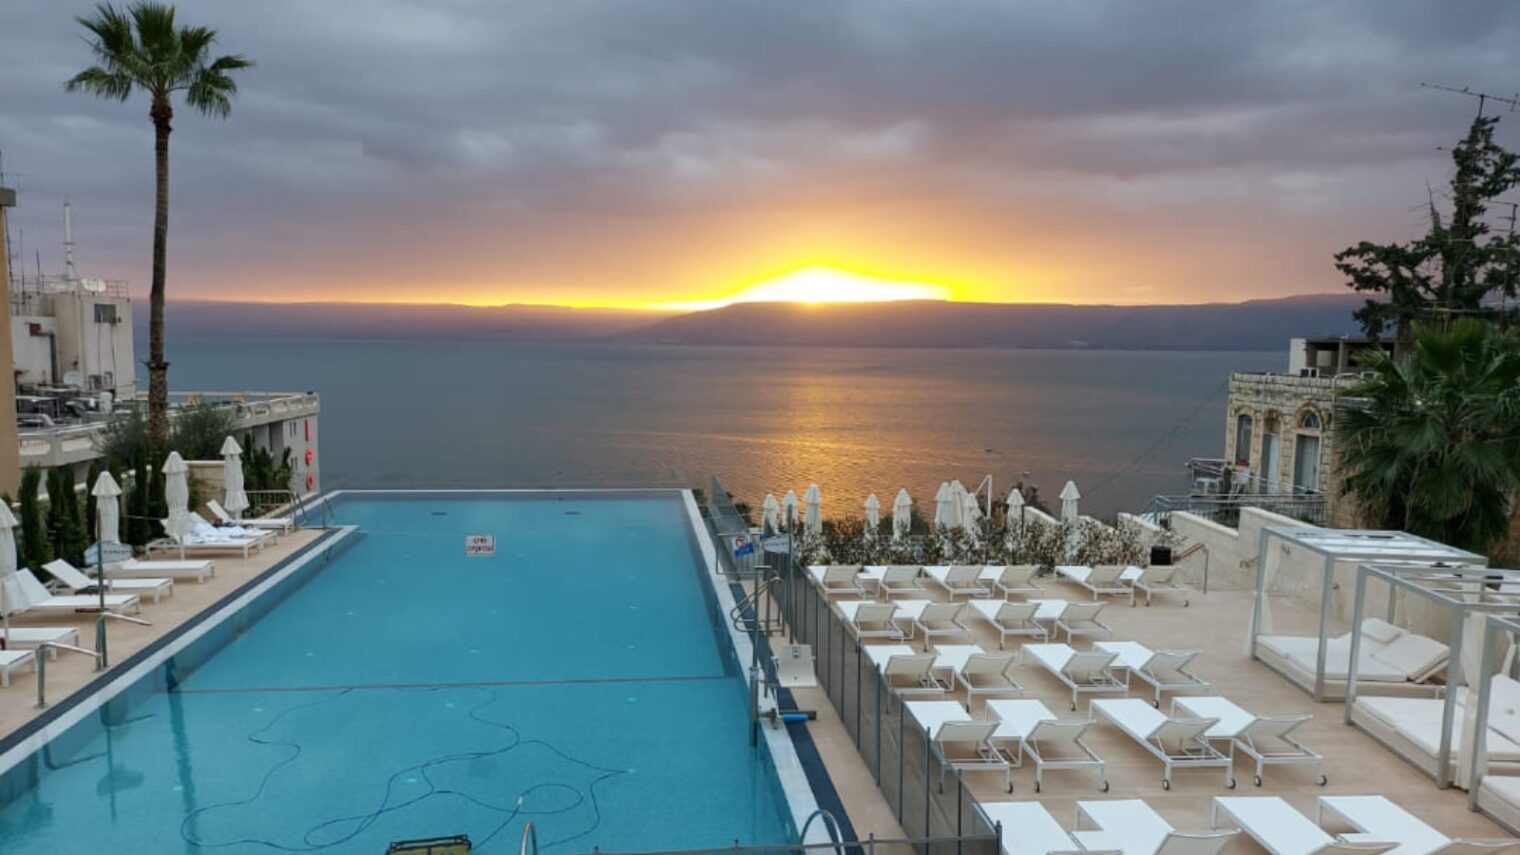 Dawn breaks at the  Sofia Sea of Galilee Hotel, Tiberias. Photo courtesy of Sofia Sea of Galilee